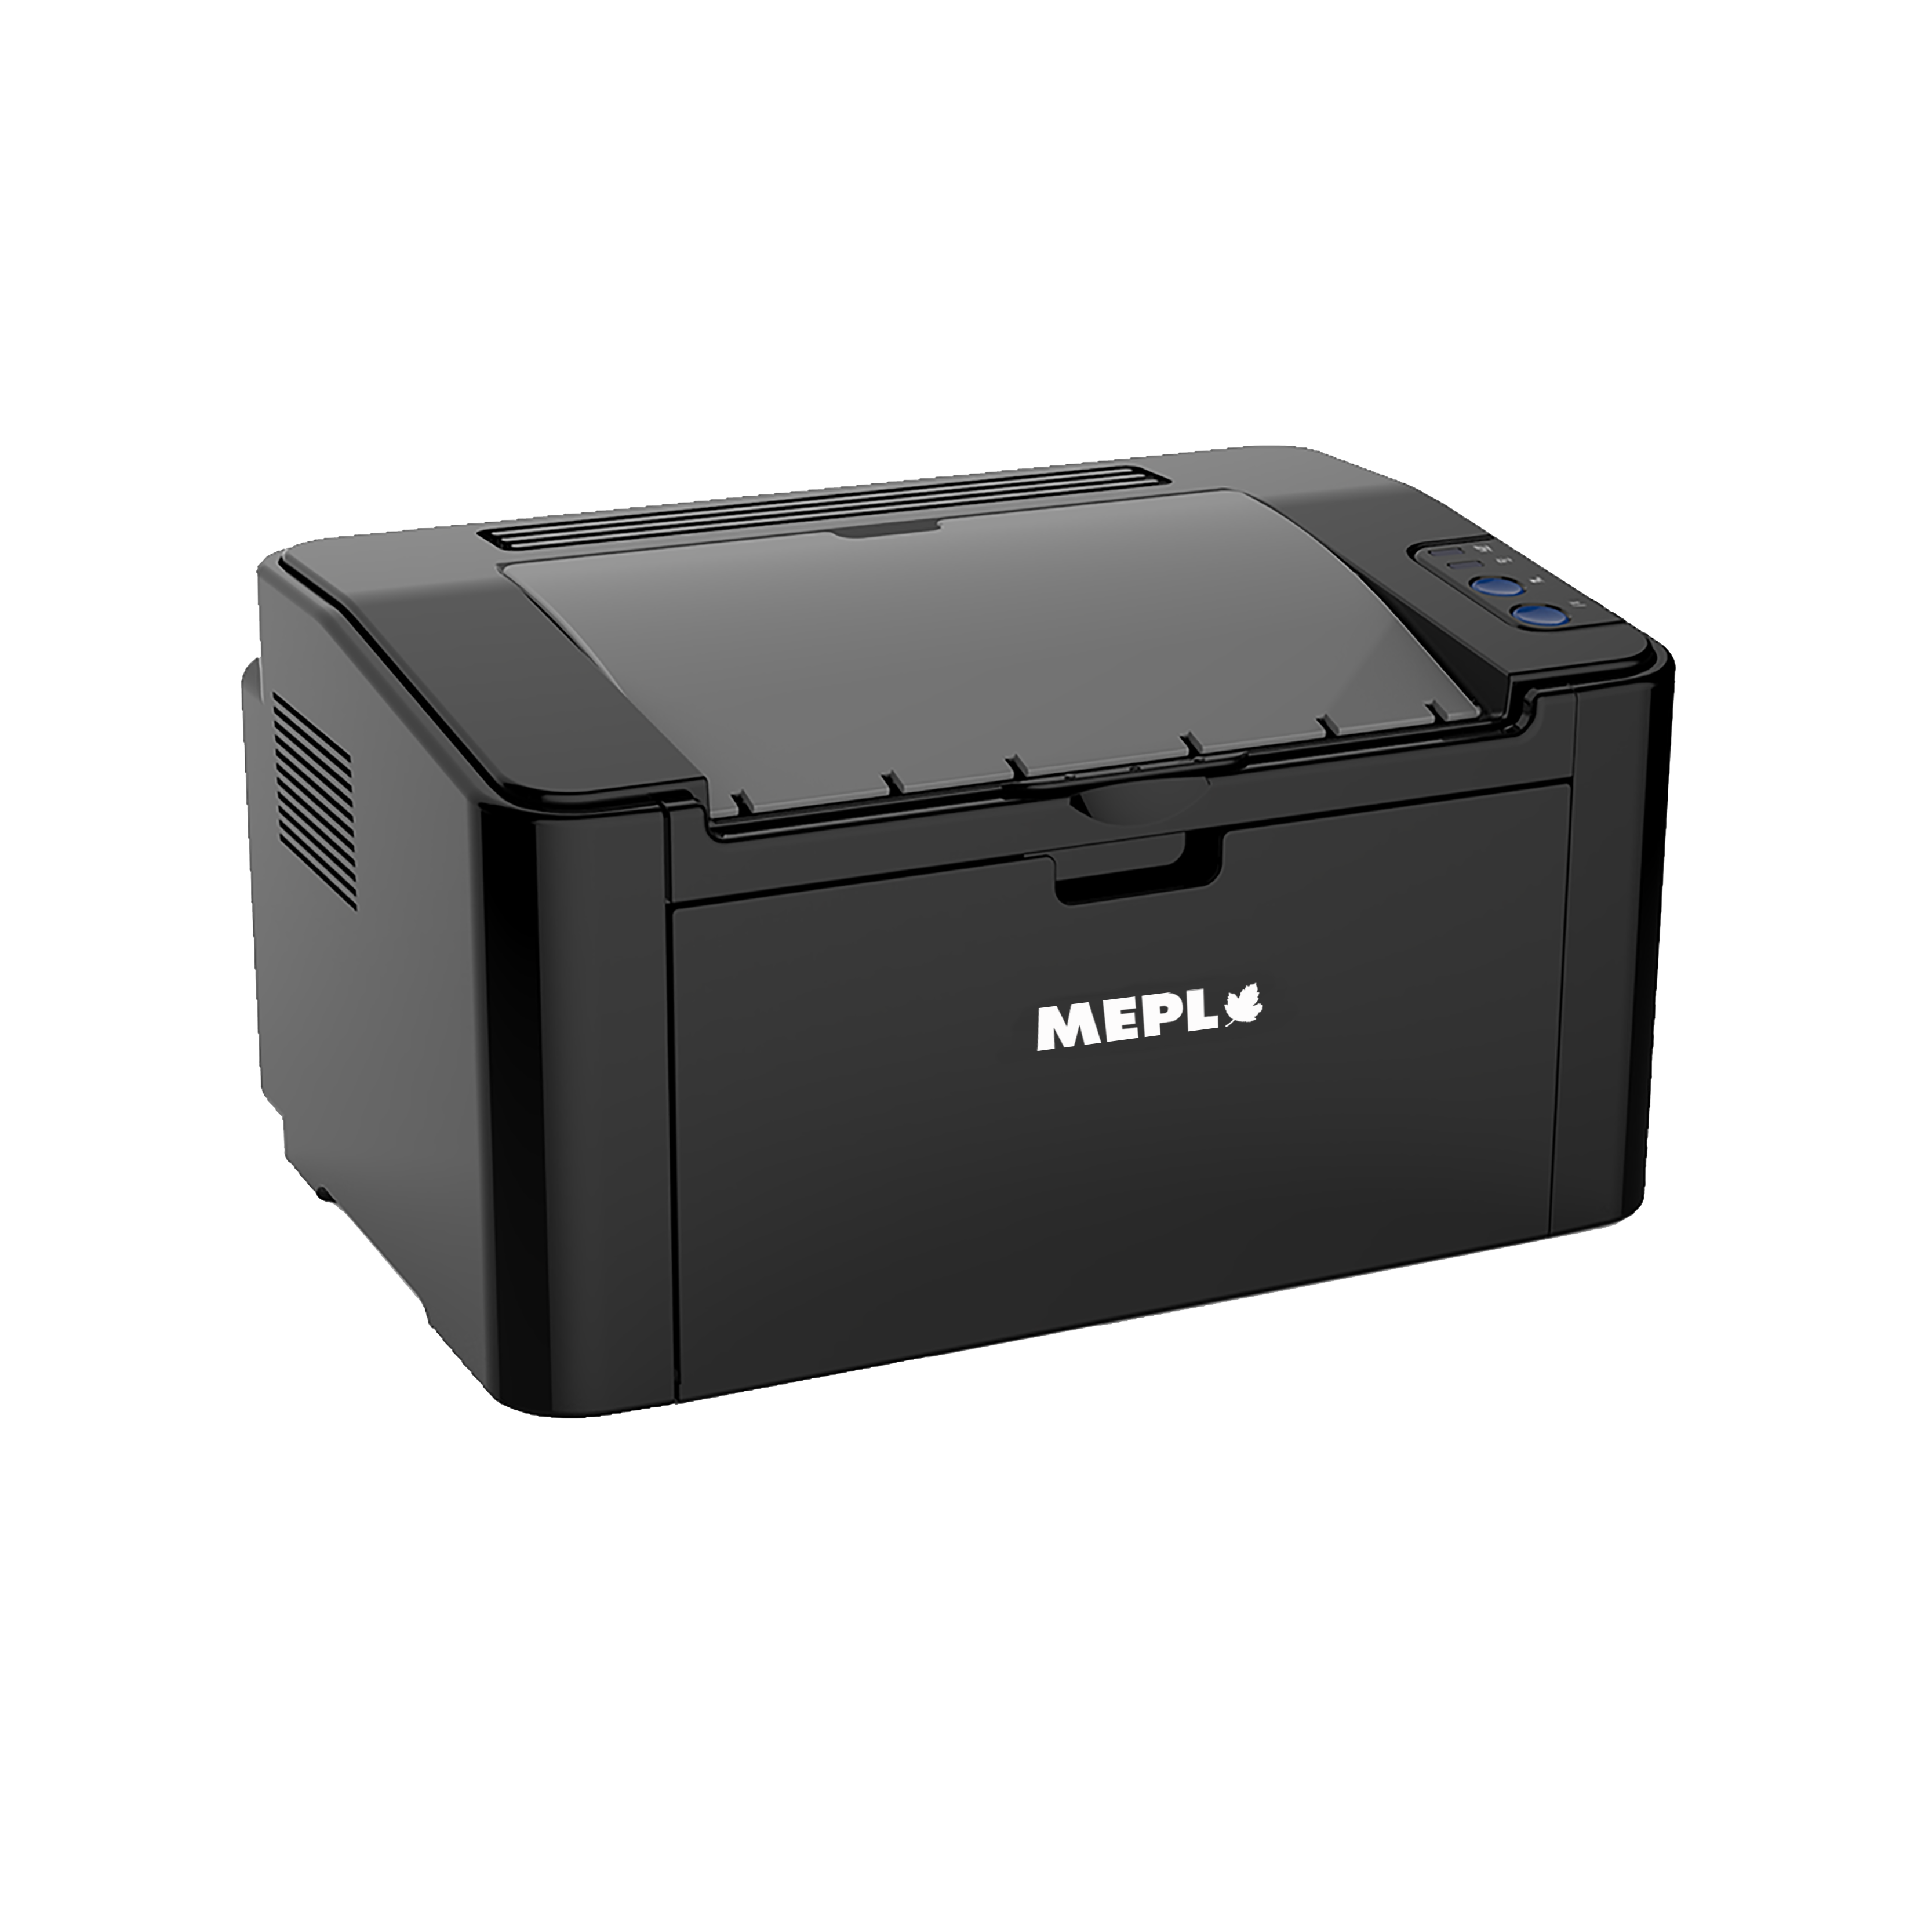 MEPL Multifunction Printer MP2503W